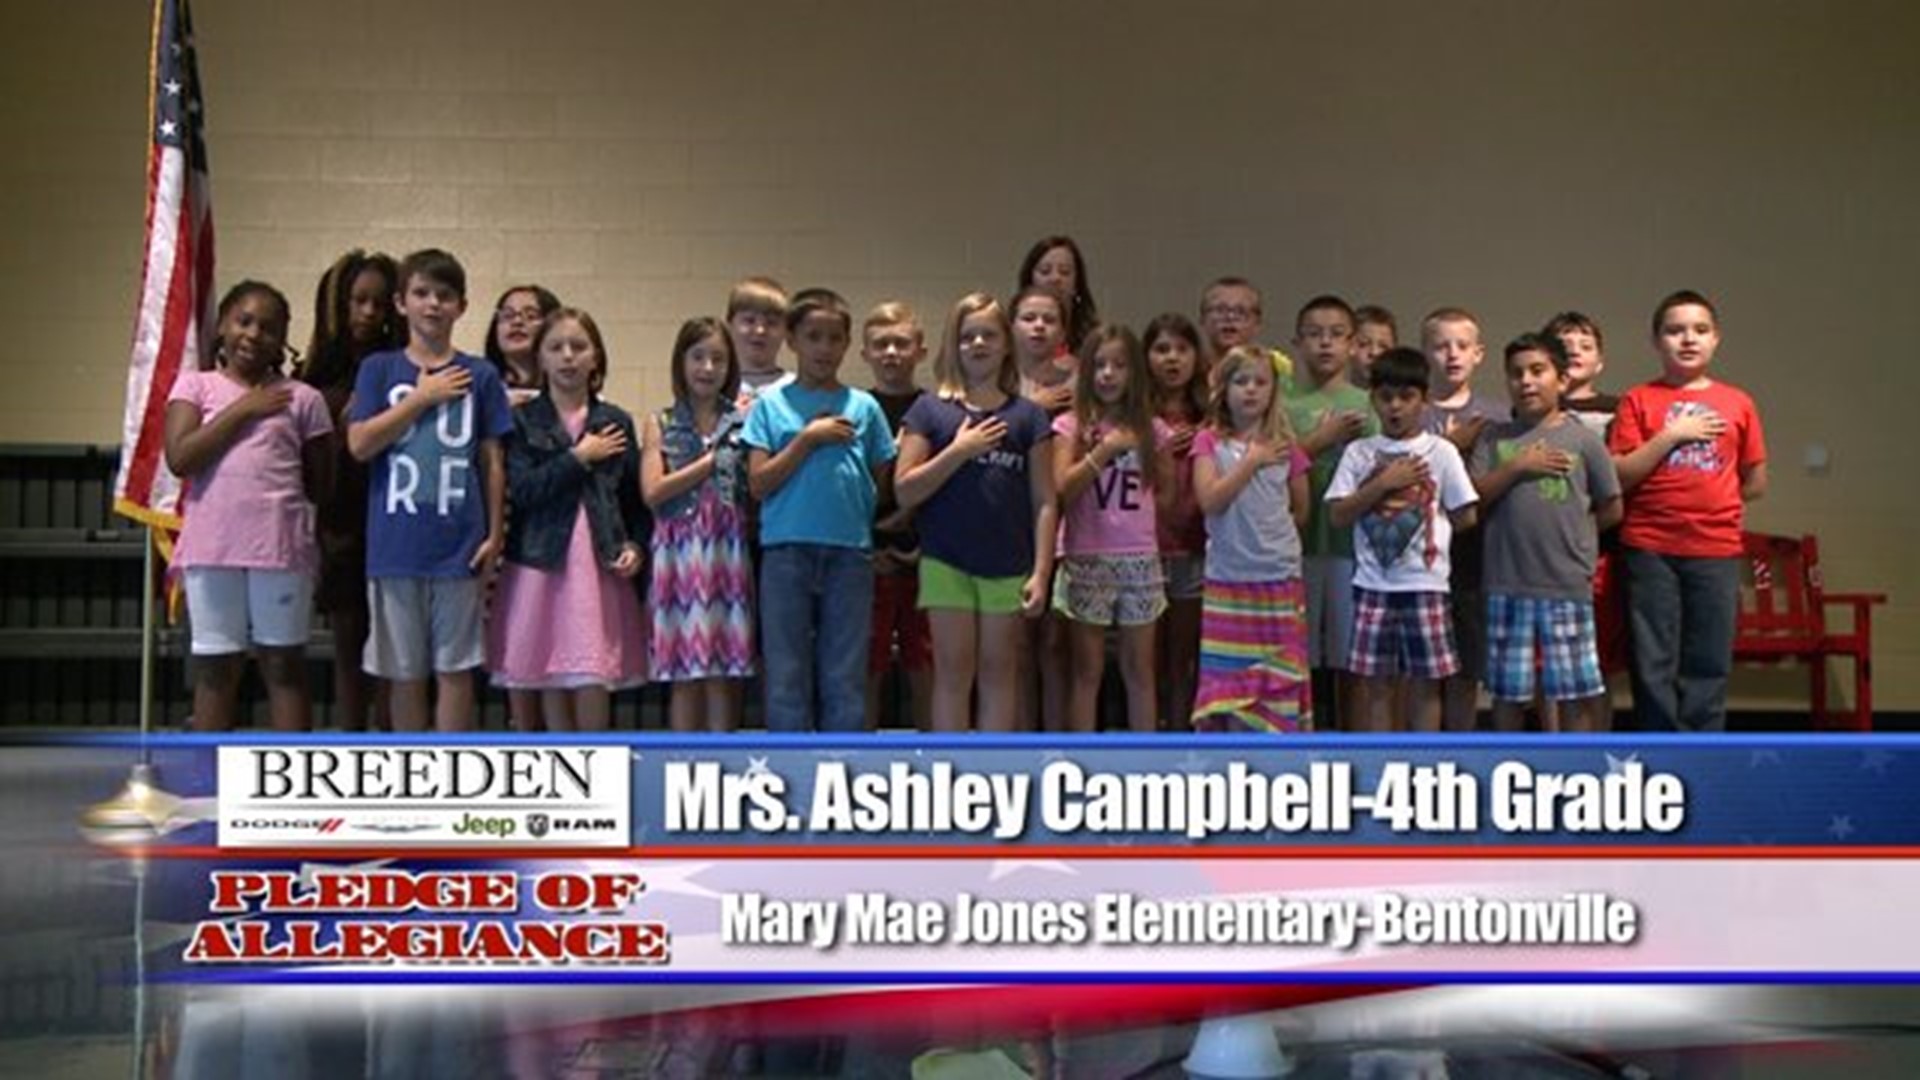 Mary Mae Jones Elementary - Bentonville - Mrs. Ashley Campbell - 4th Grade